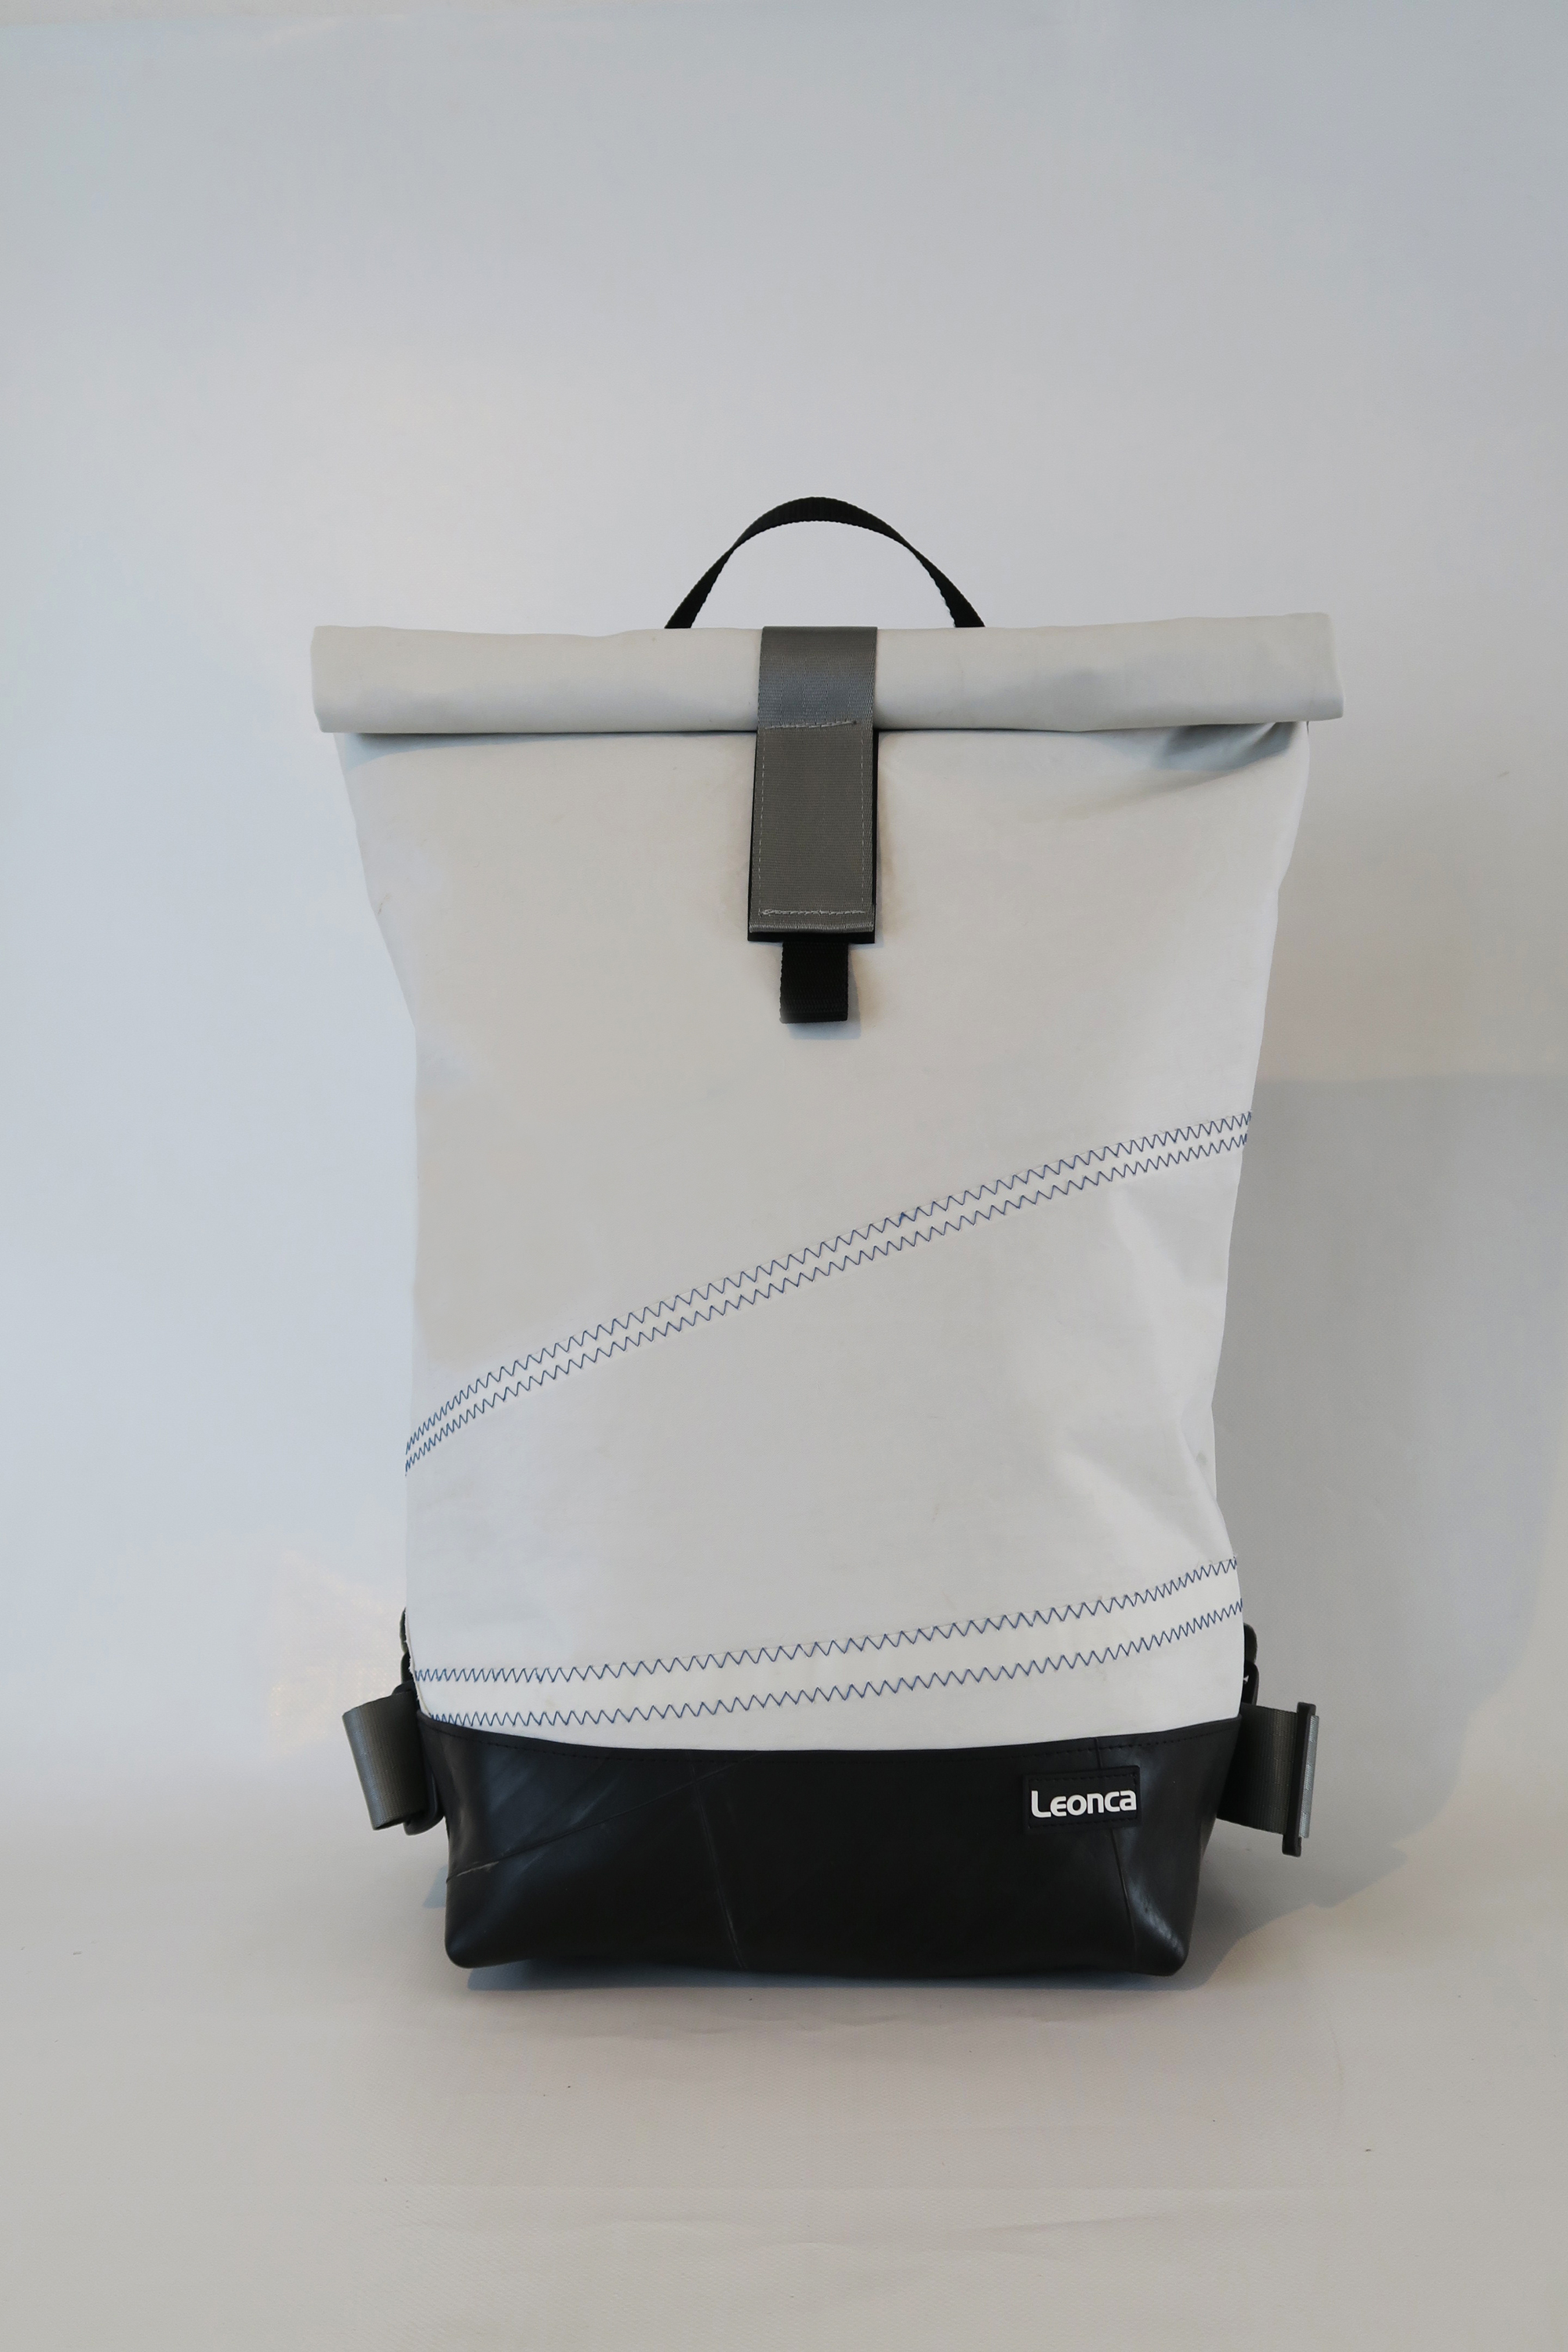 Leonca - Rolling backpack sail